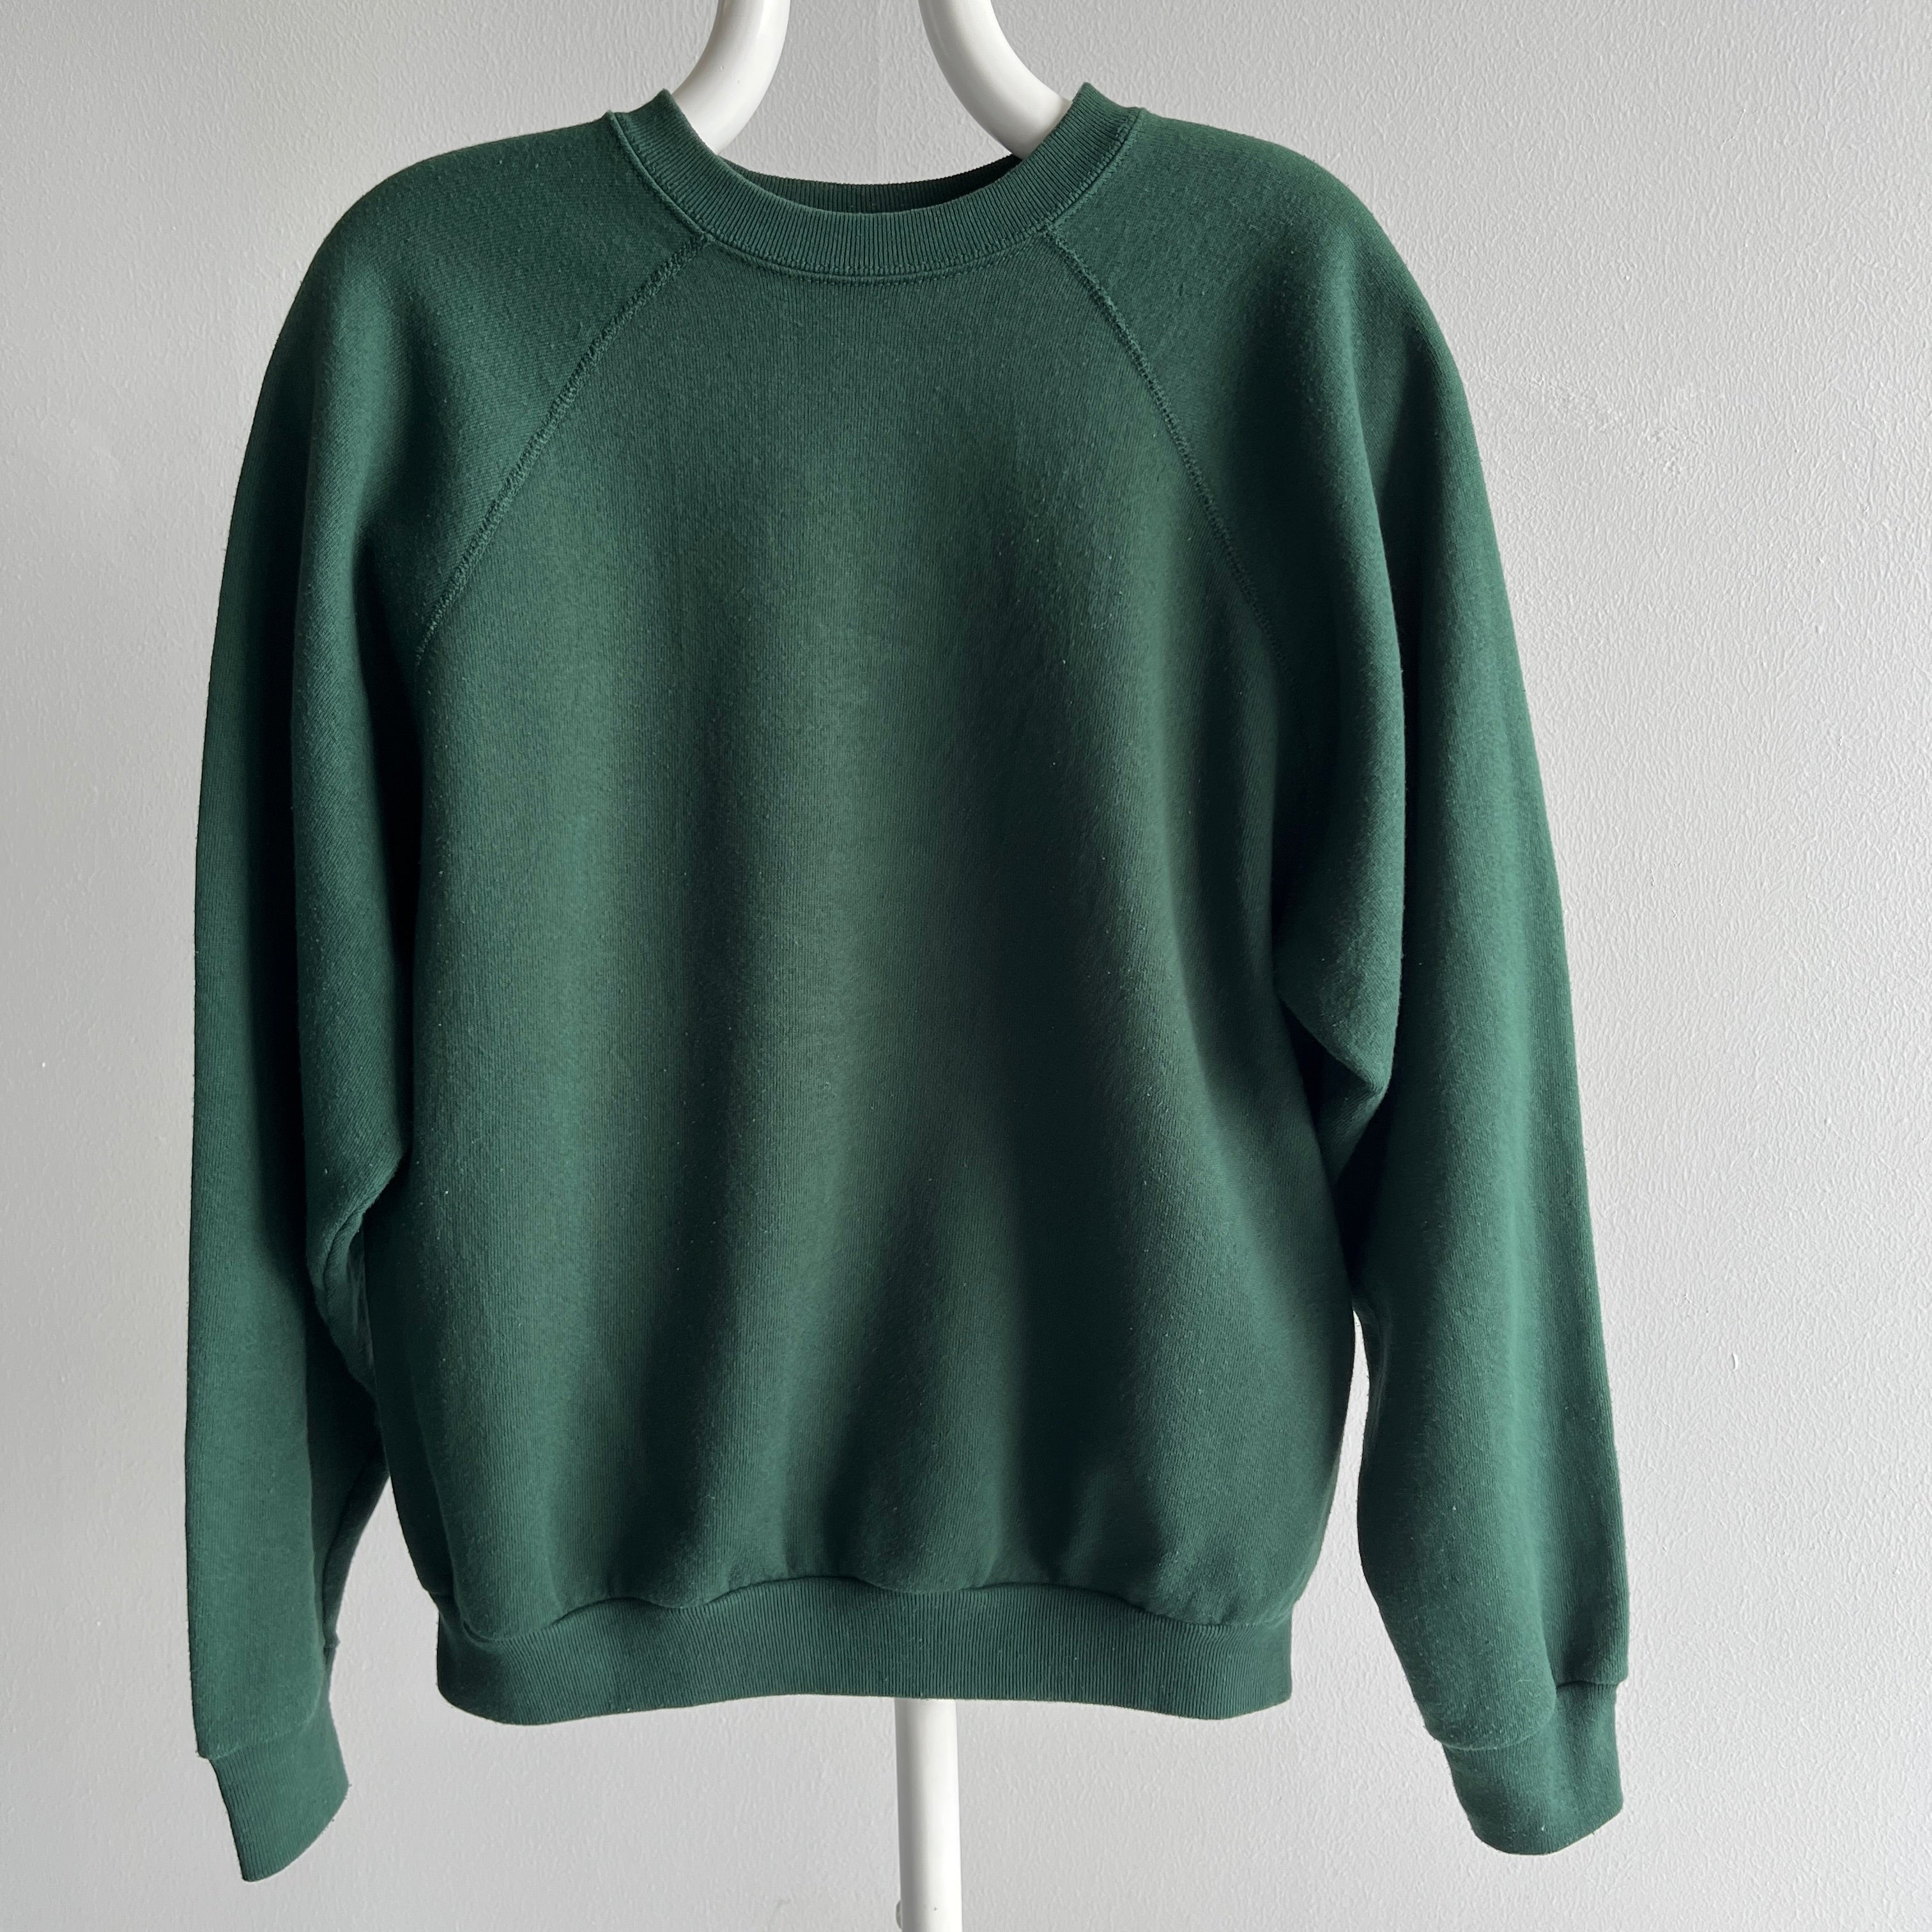 1990s Dark Green Tultex Sweatshirt - An American Made Good One